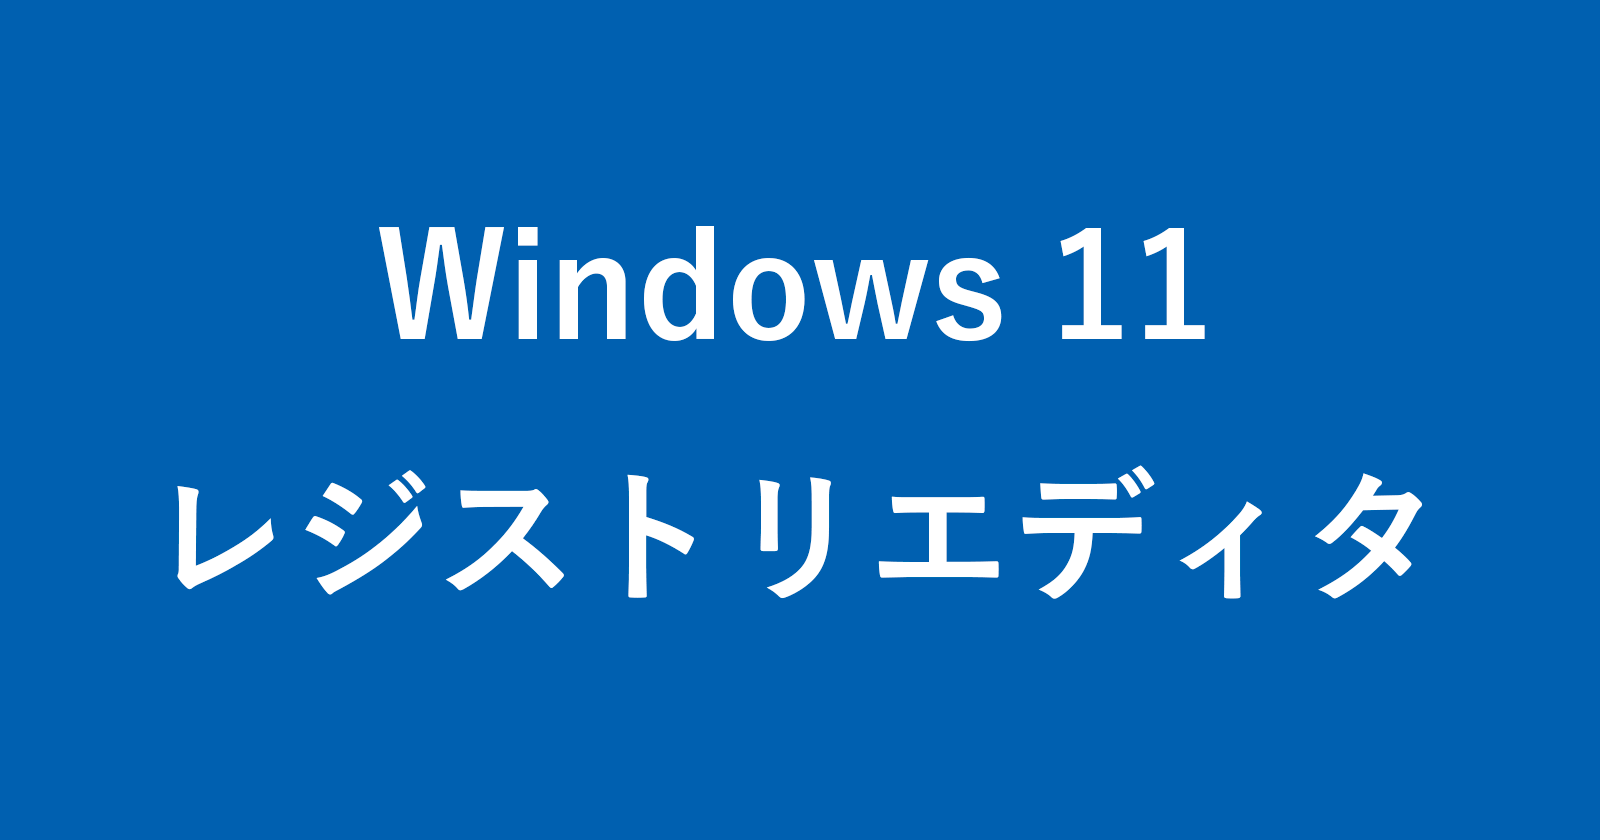 windows 11 open registry editor